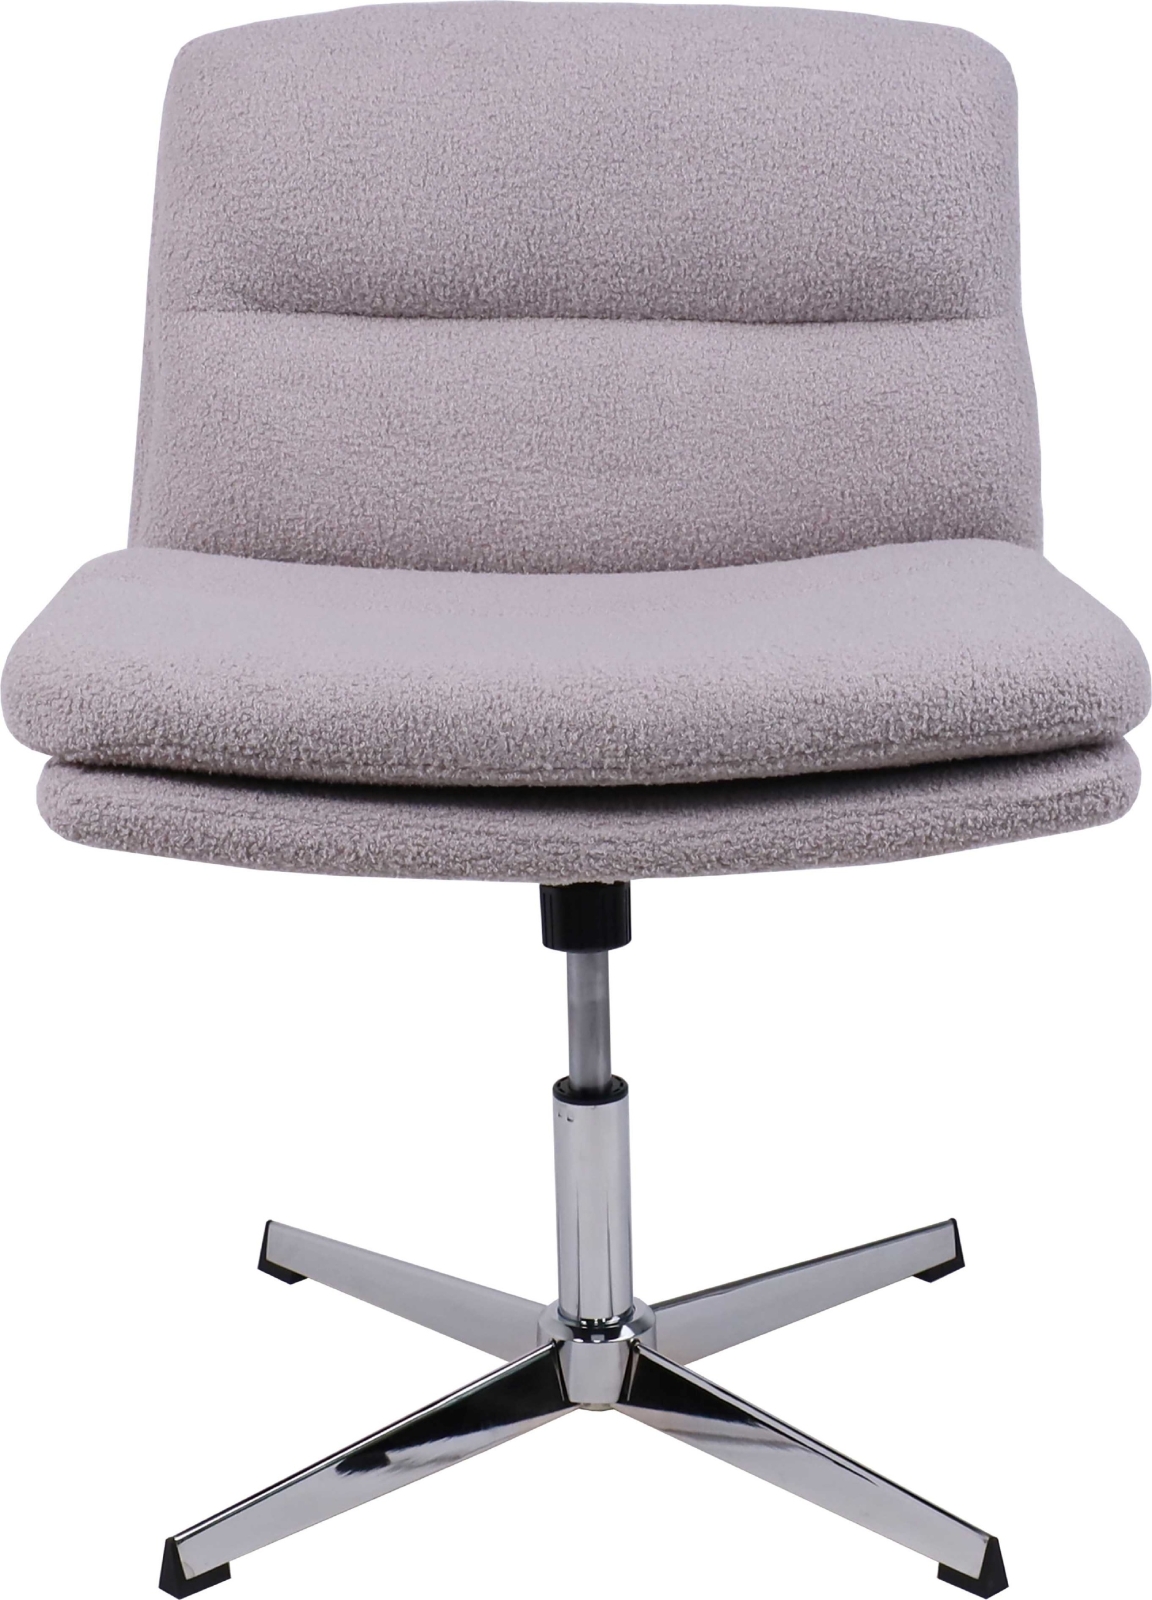 Кресло компьютерное AKSHOME Andre светло-серый букле CM2023-8/хром (105414) - Фото 3